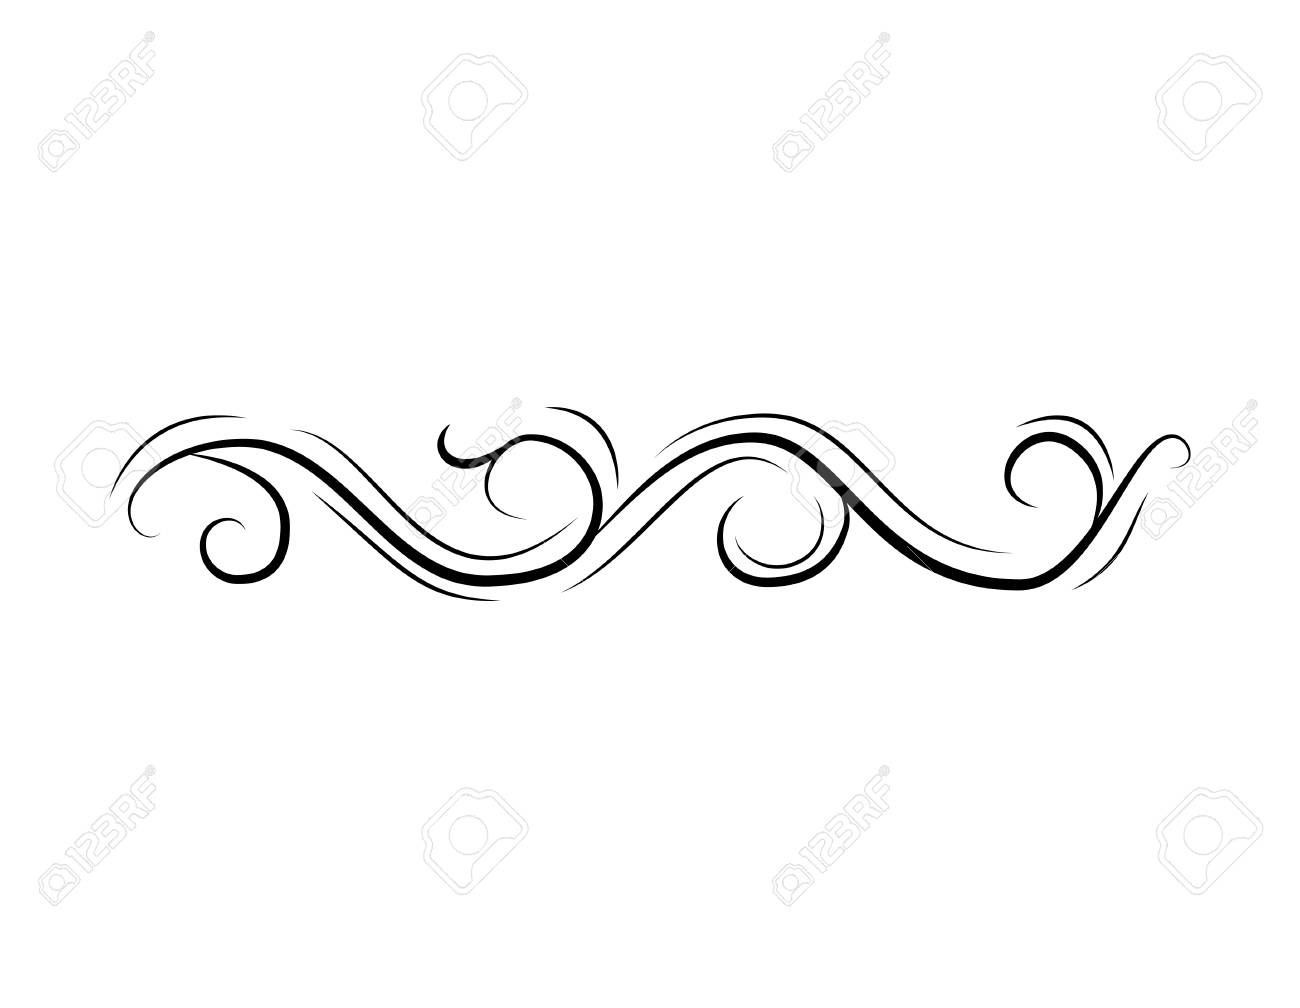 Decorative curl. Swirl. Calligraphic filigree element for design.